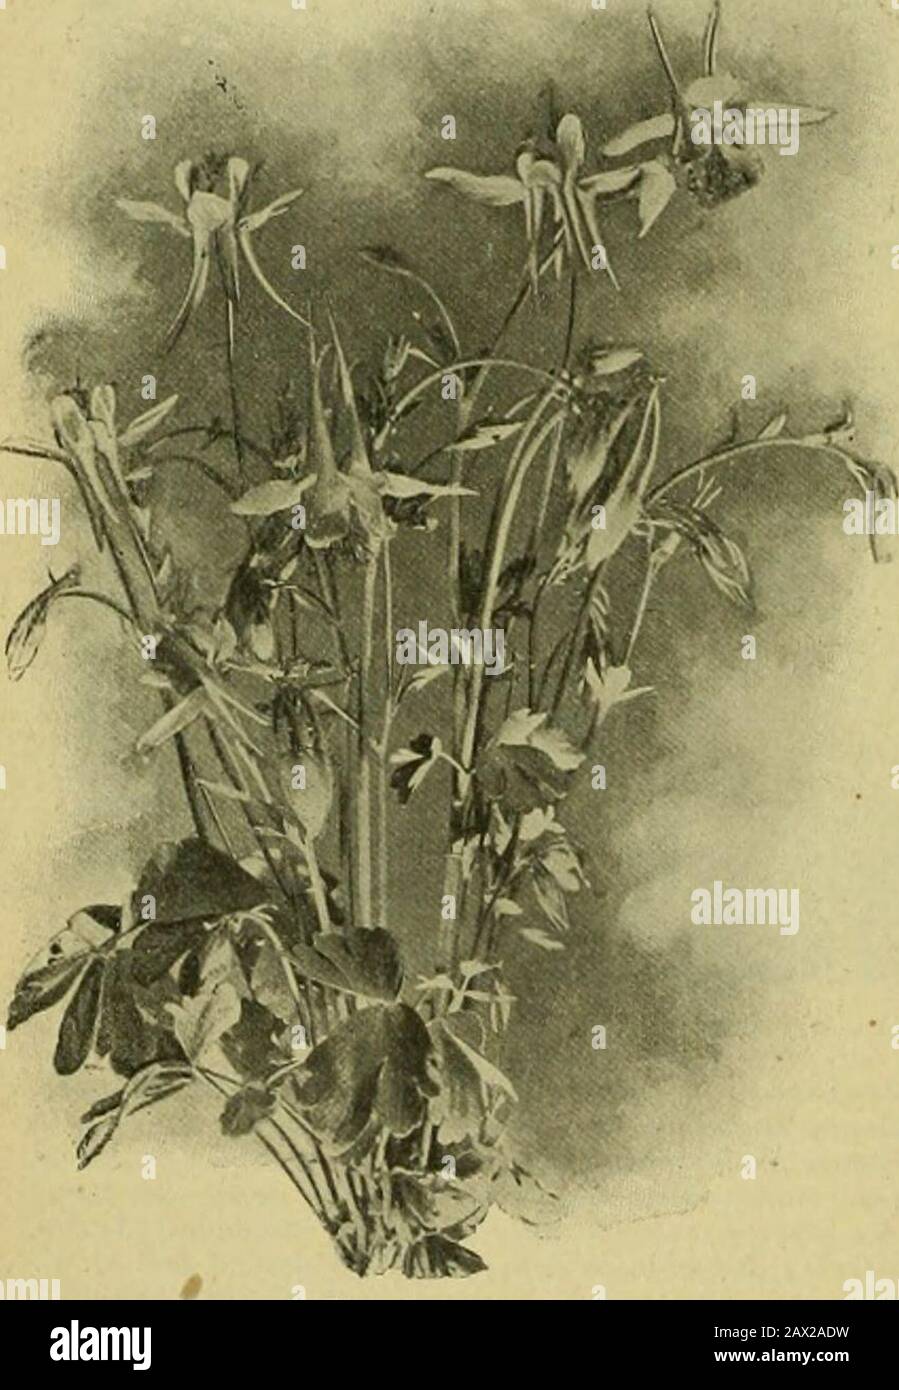 The century supplement to the dictionary of gardening, a practical and scientific encyclopaedia of horticulture for gardeners and botanists . C. a. varie-gatus, C. natalensis, and 0. Papyrus; Eichhornia ozureo,E. Martiana, and E. speciosa; Herpestis Monniera;Hydrolea spinosa; Jussieua grandiftora; Limnanthemumindicum; Limnobiu7n bogoterise; Limnocliaris emarginata ;Myriophyllum proserpinacoides; Nelumhium luteum andN. speciosum; Neplunia plena; Nymphsea amazonum, N.Boucheana, N. capensi.i, N. Danbenyan&lt;t, N. Deaniana,N. devoniensis, N. elegans, N. Eugenie, N. flava, N. gigantea,N. gracilis, Stock Photo